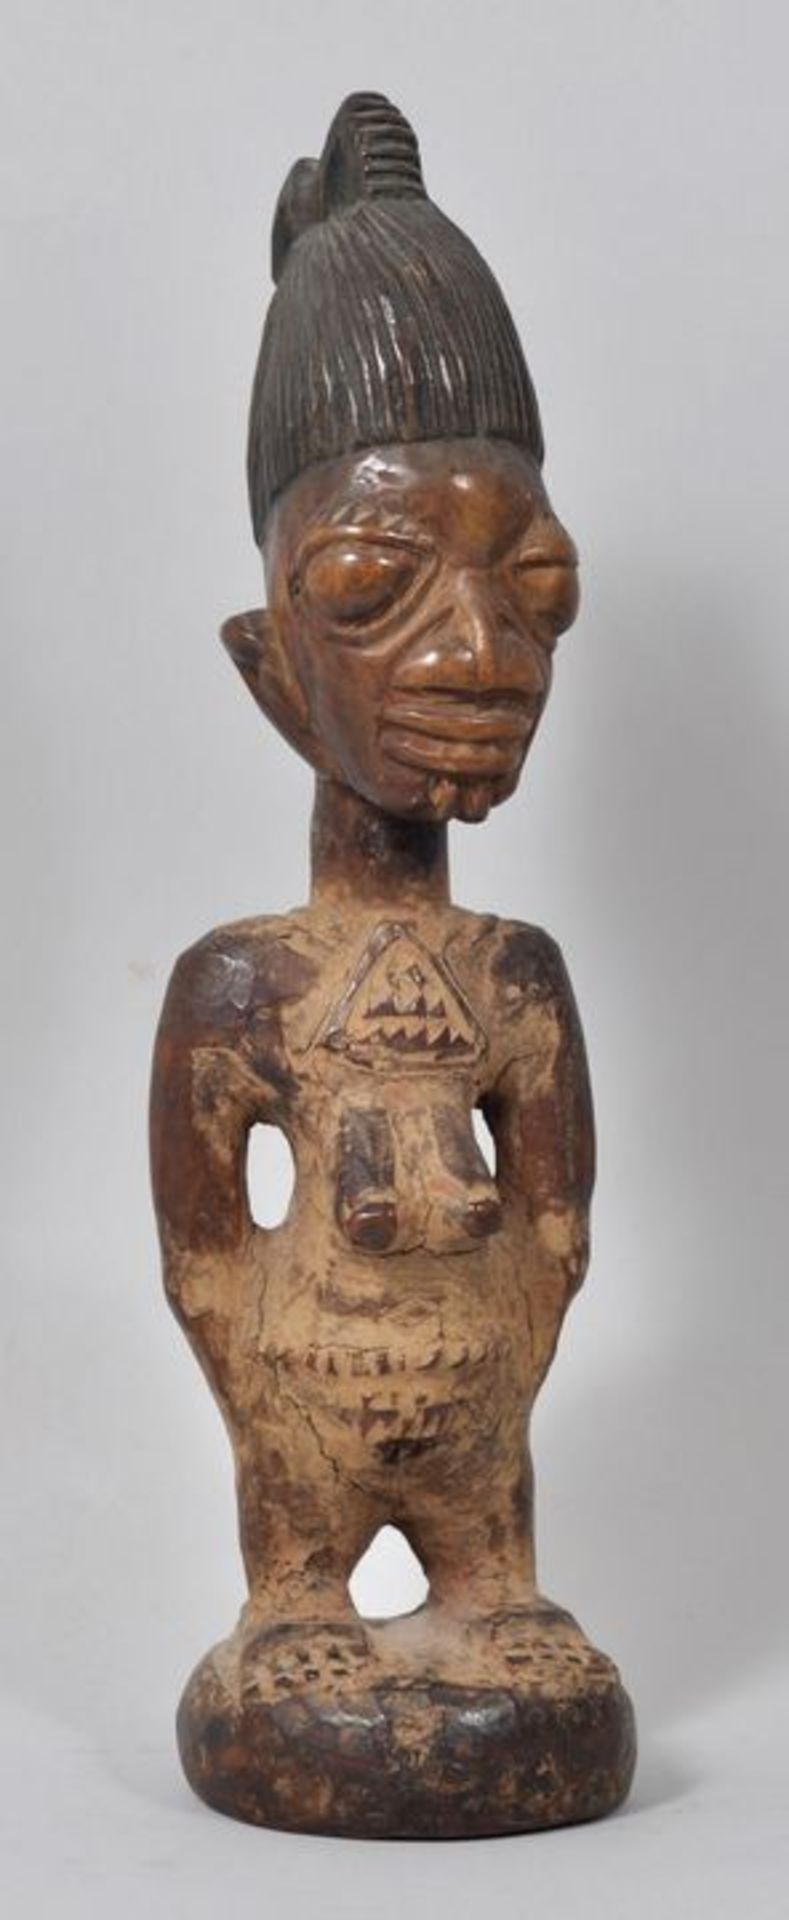 Weibliche Figur (ibeji), Nigeria, Yoruba